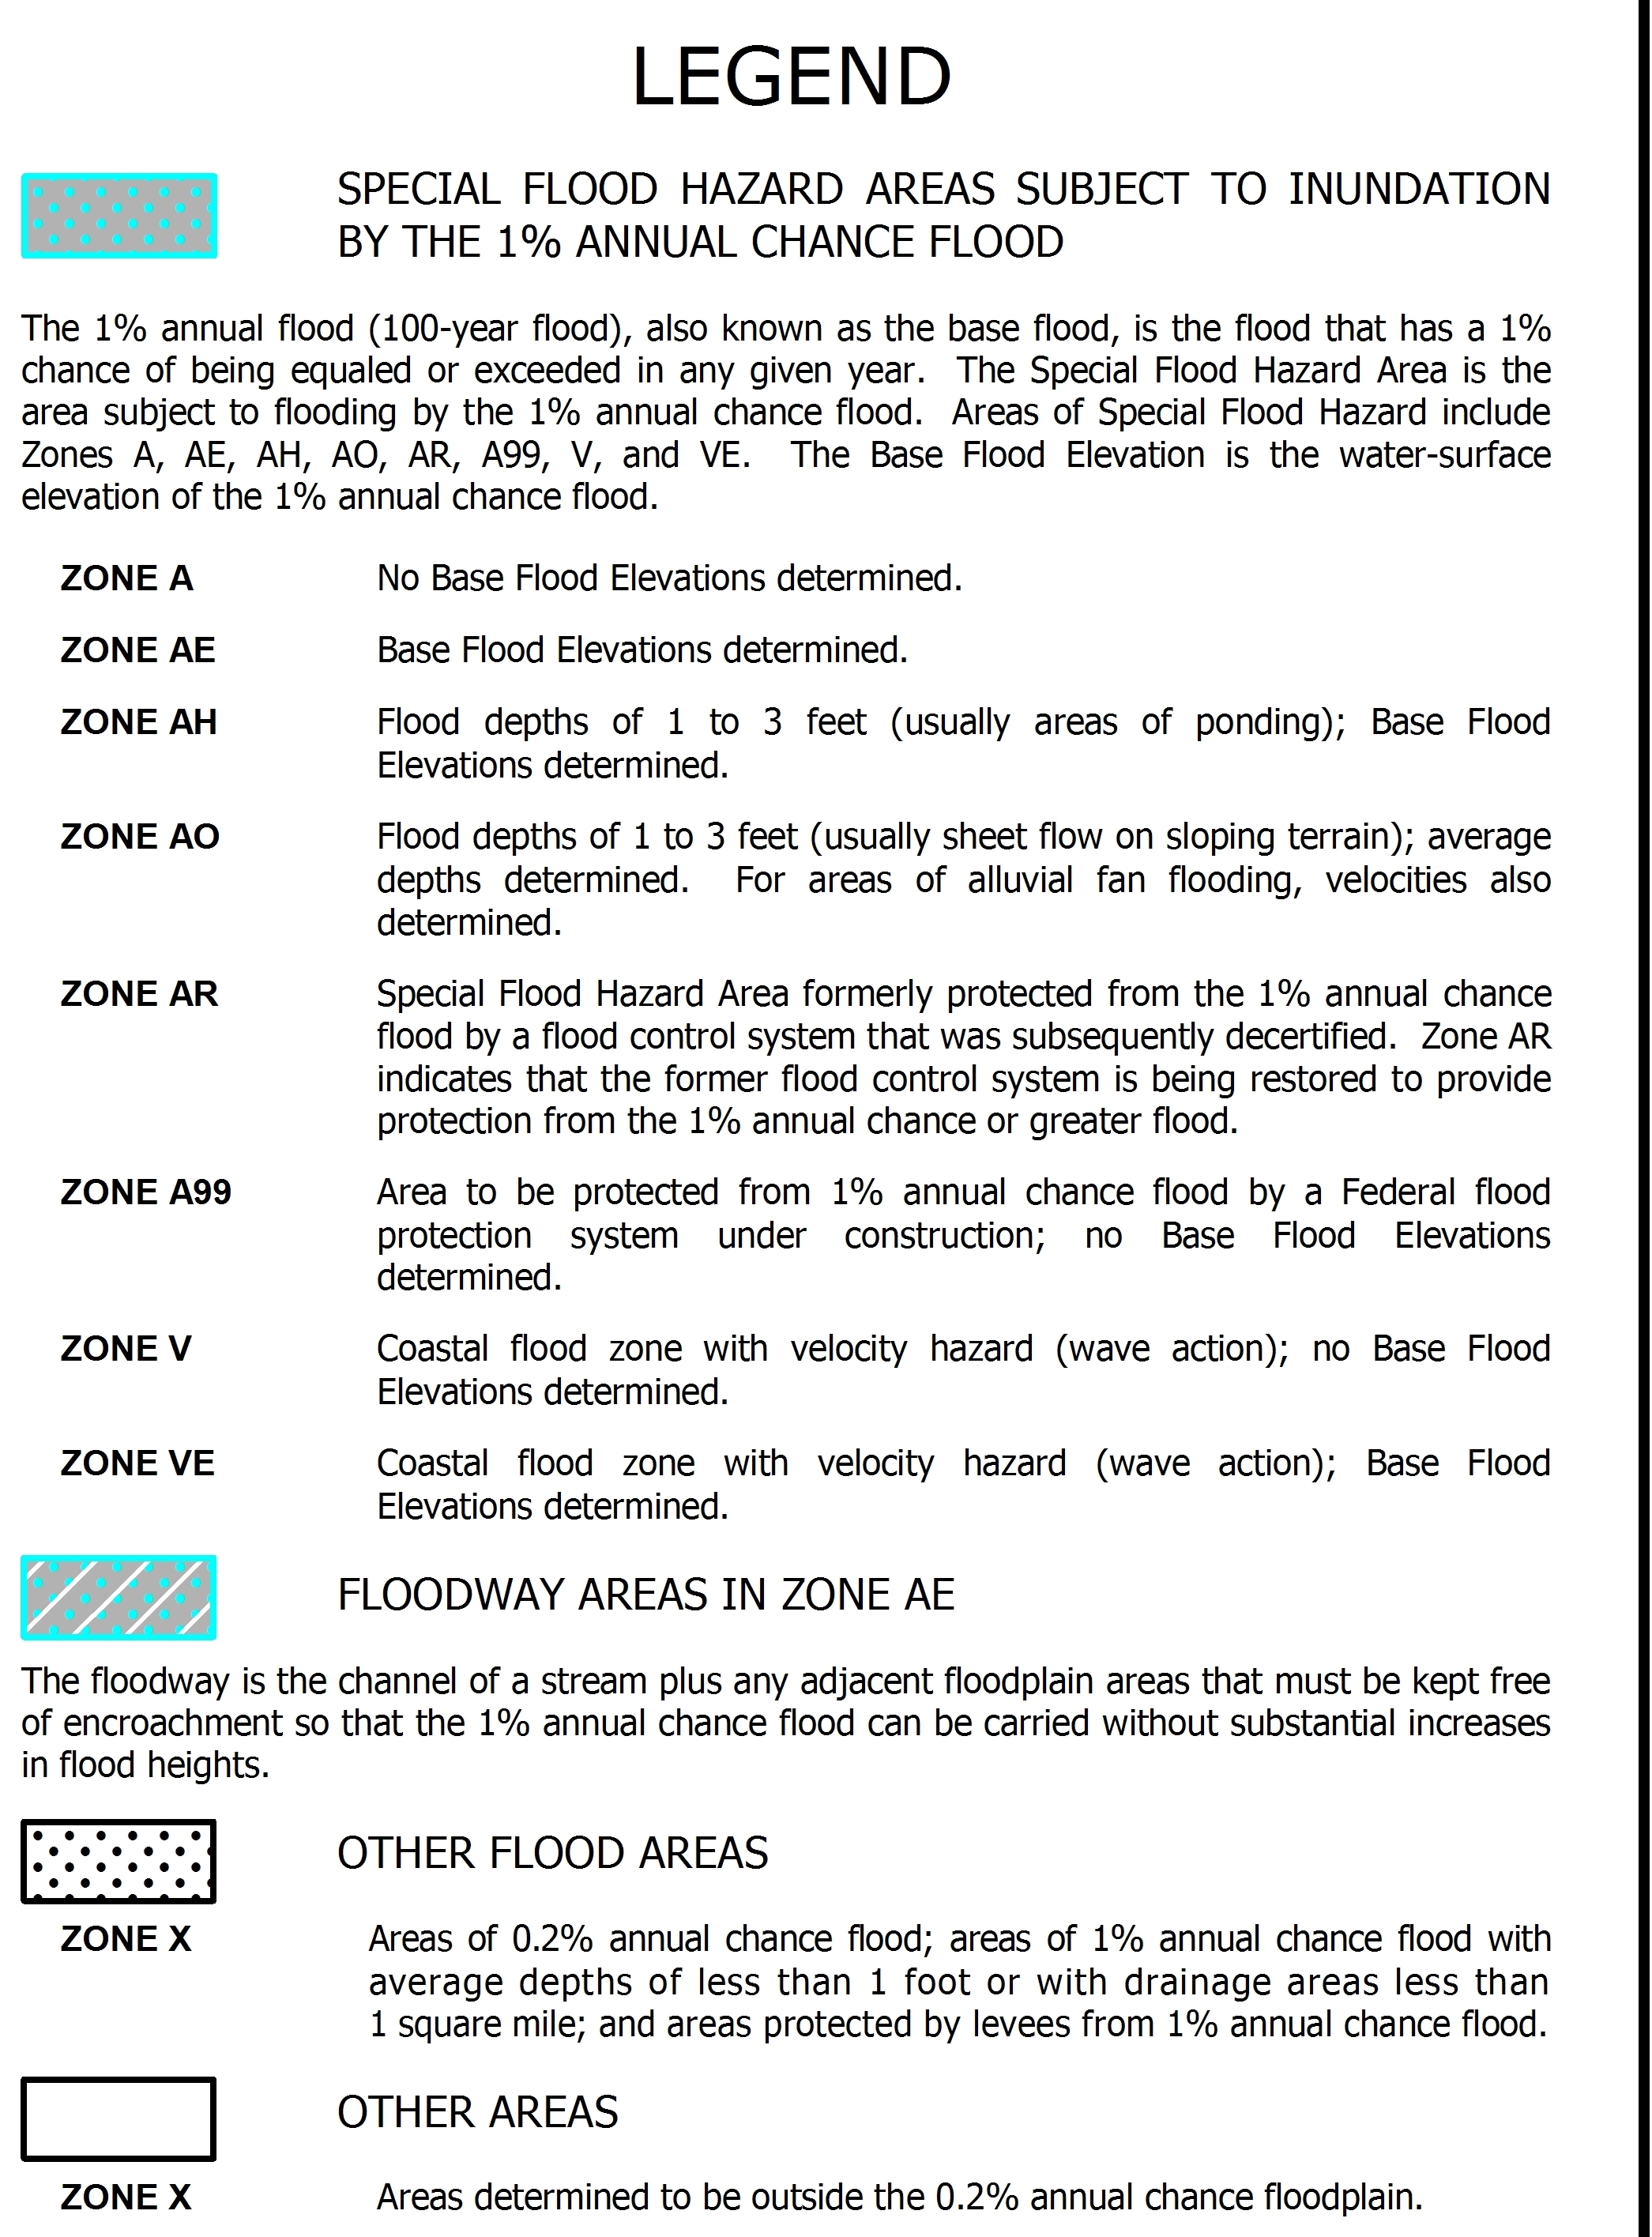 FEMA floodplain designations map legend